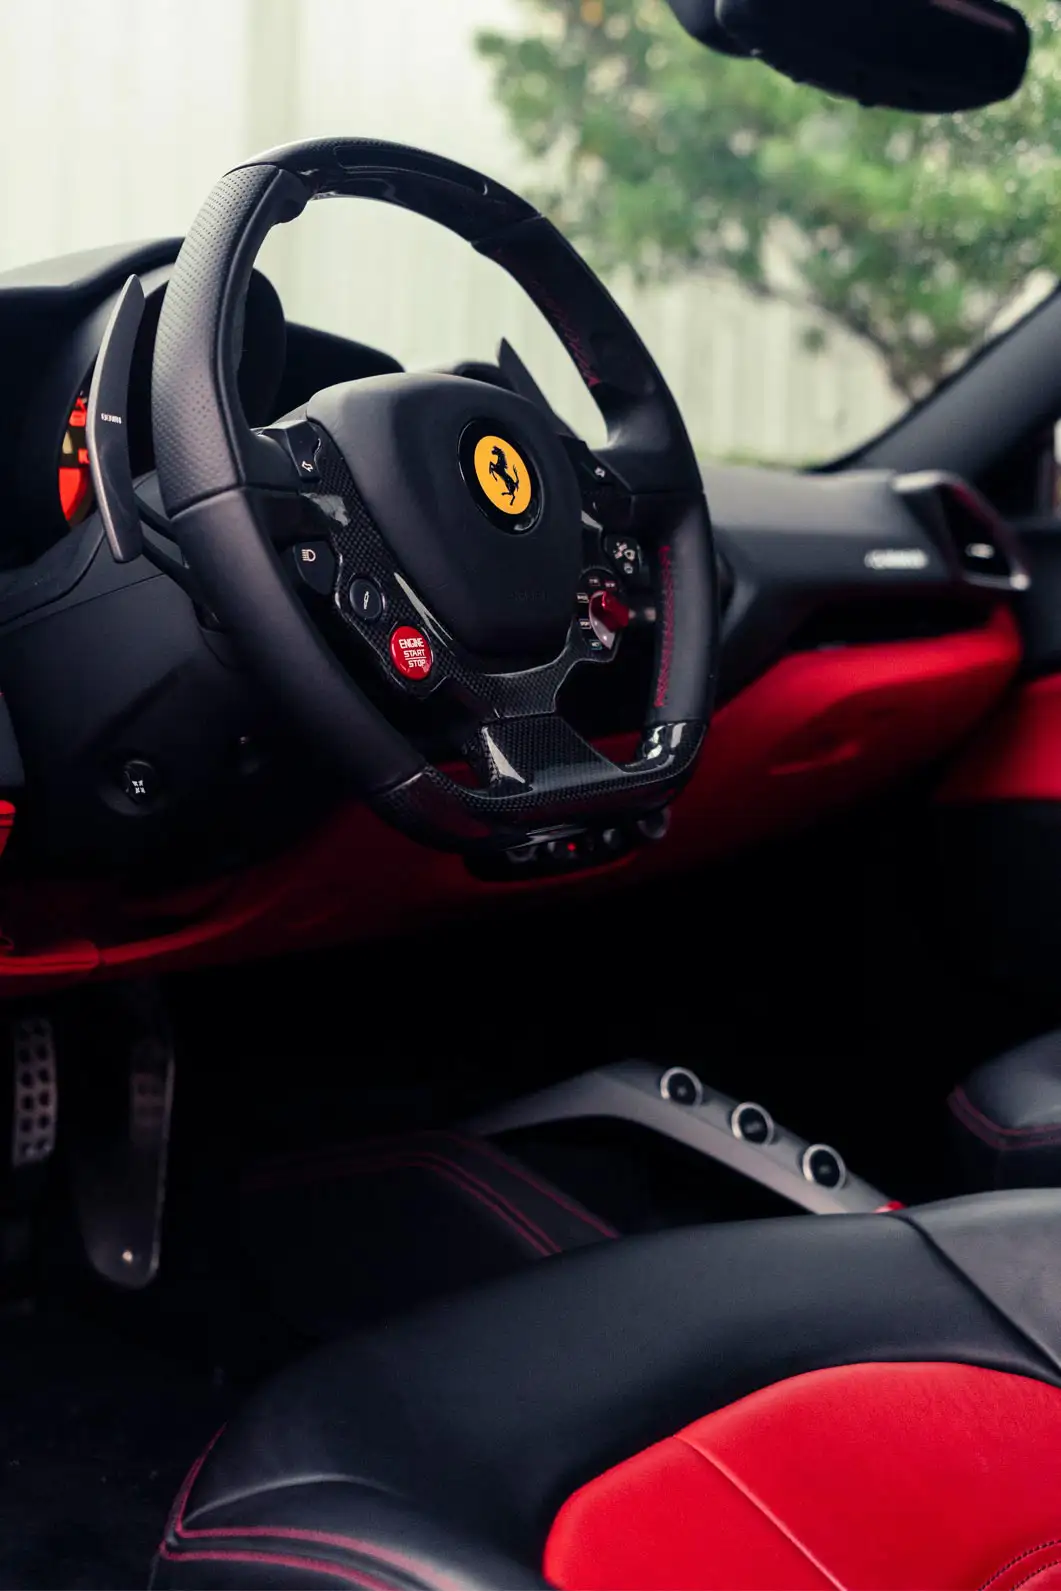 Simple yet sleek interior of the Ferrari 488.